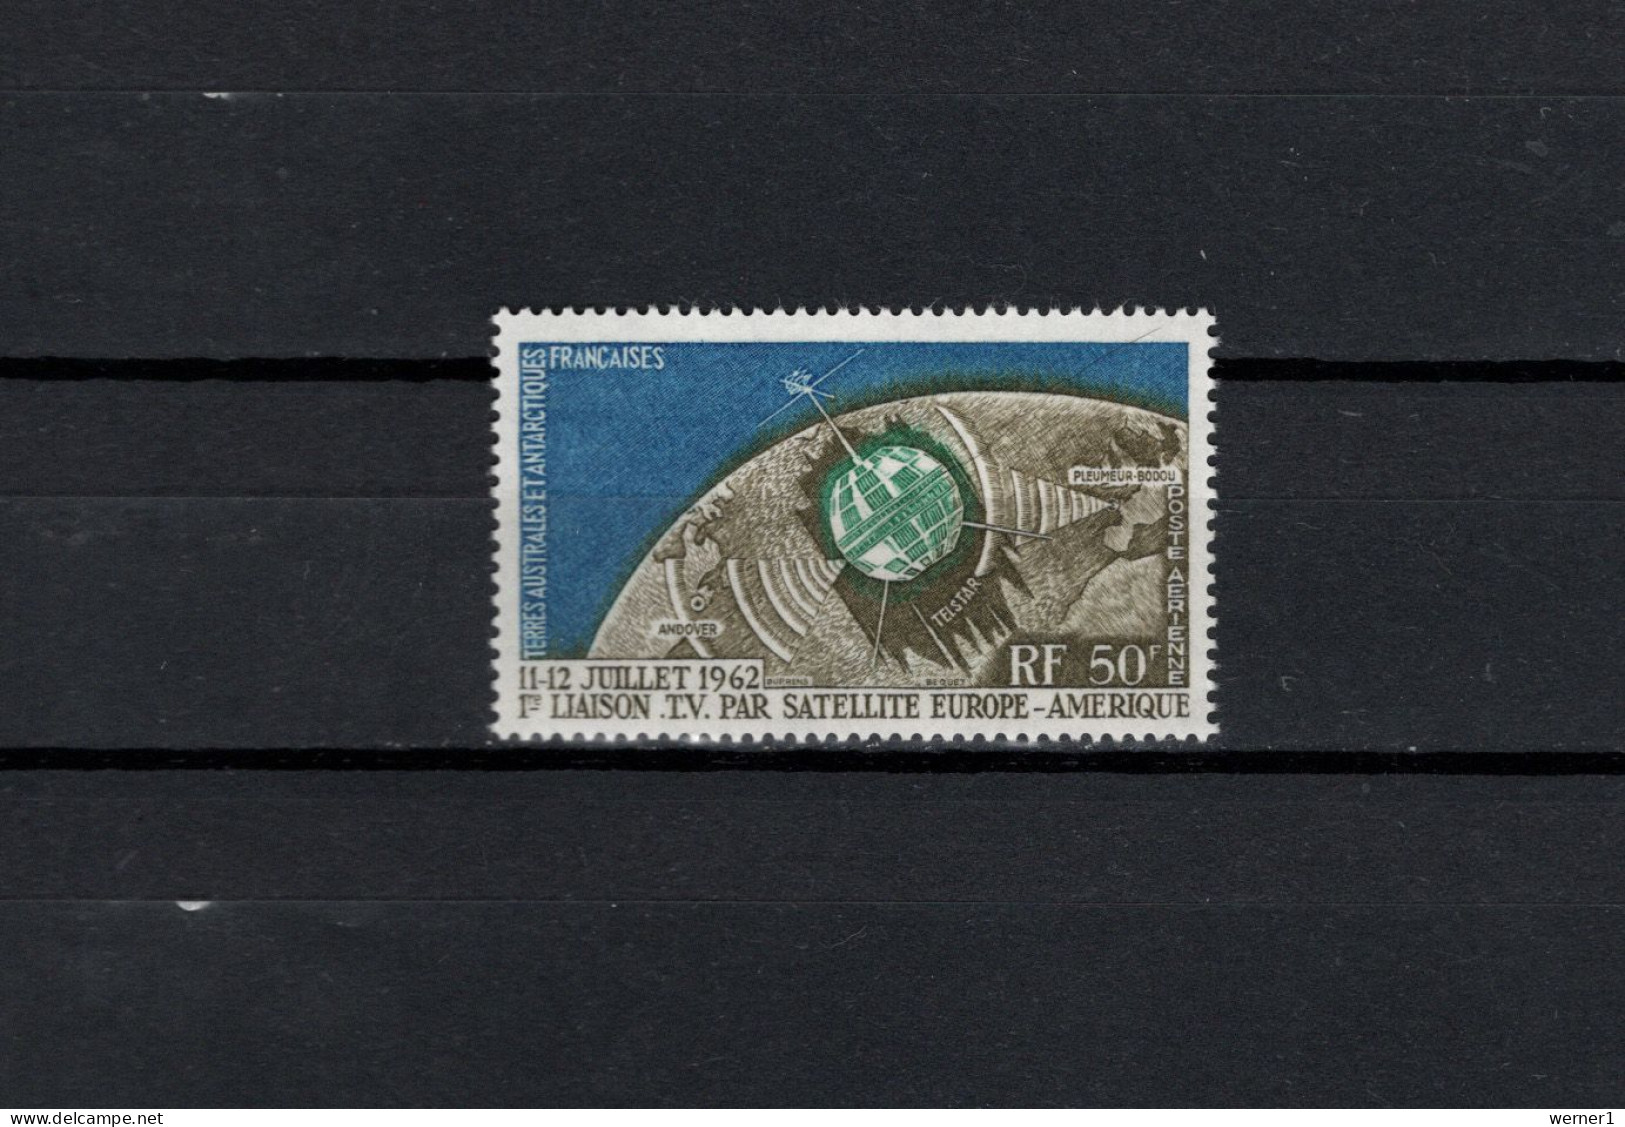 FSAT French Antarctic Territory 1962 Space Telstar Stamp MNH - Oceania